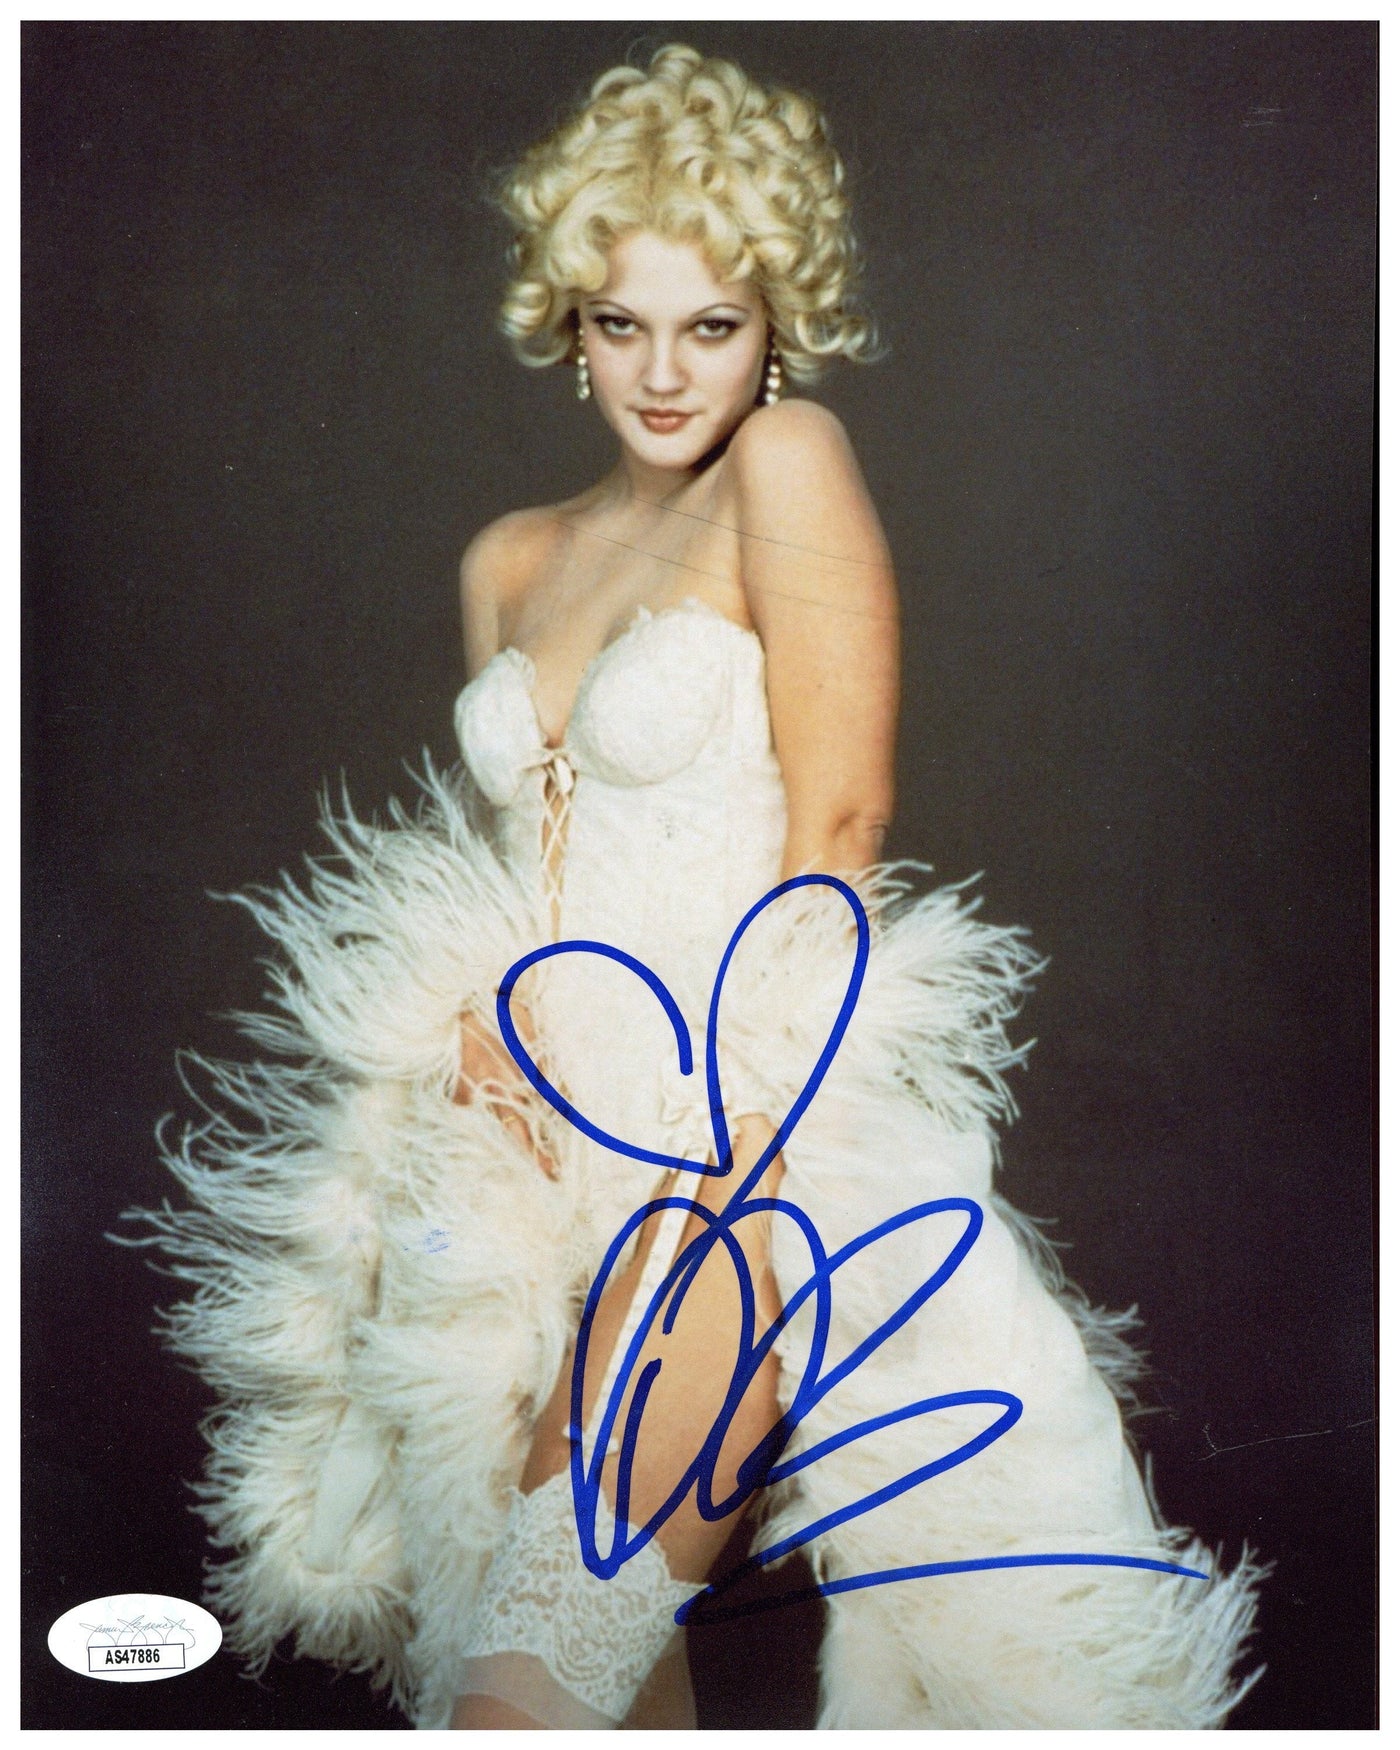 Drew Barrymore Signed 8x10 Photo Batman Forever Autographed JSA COA